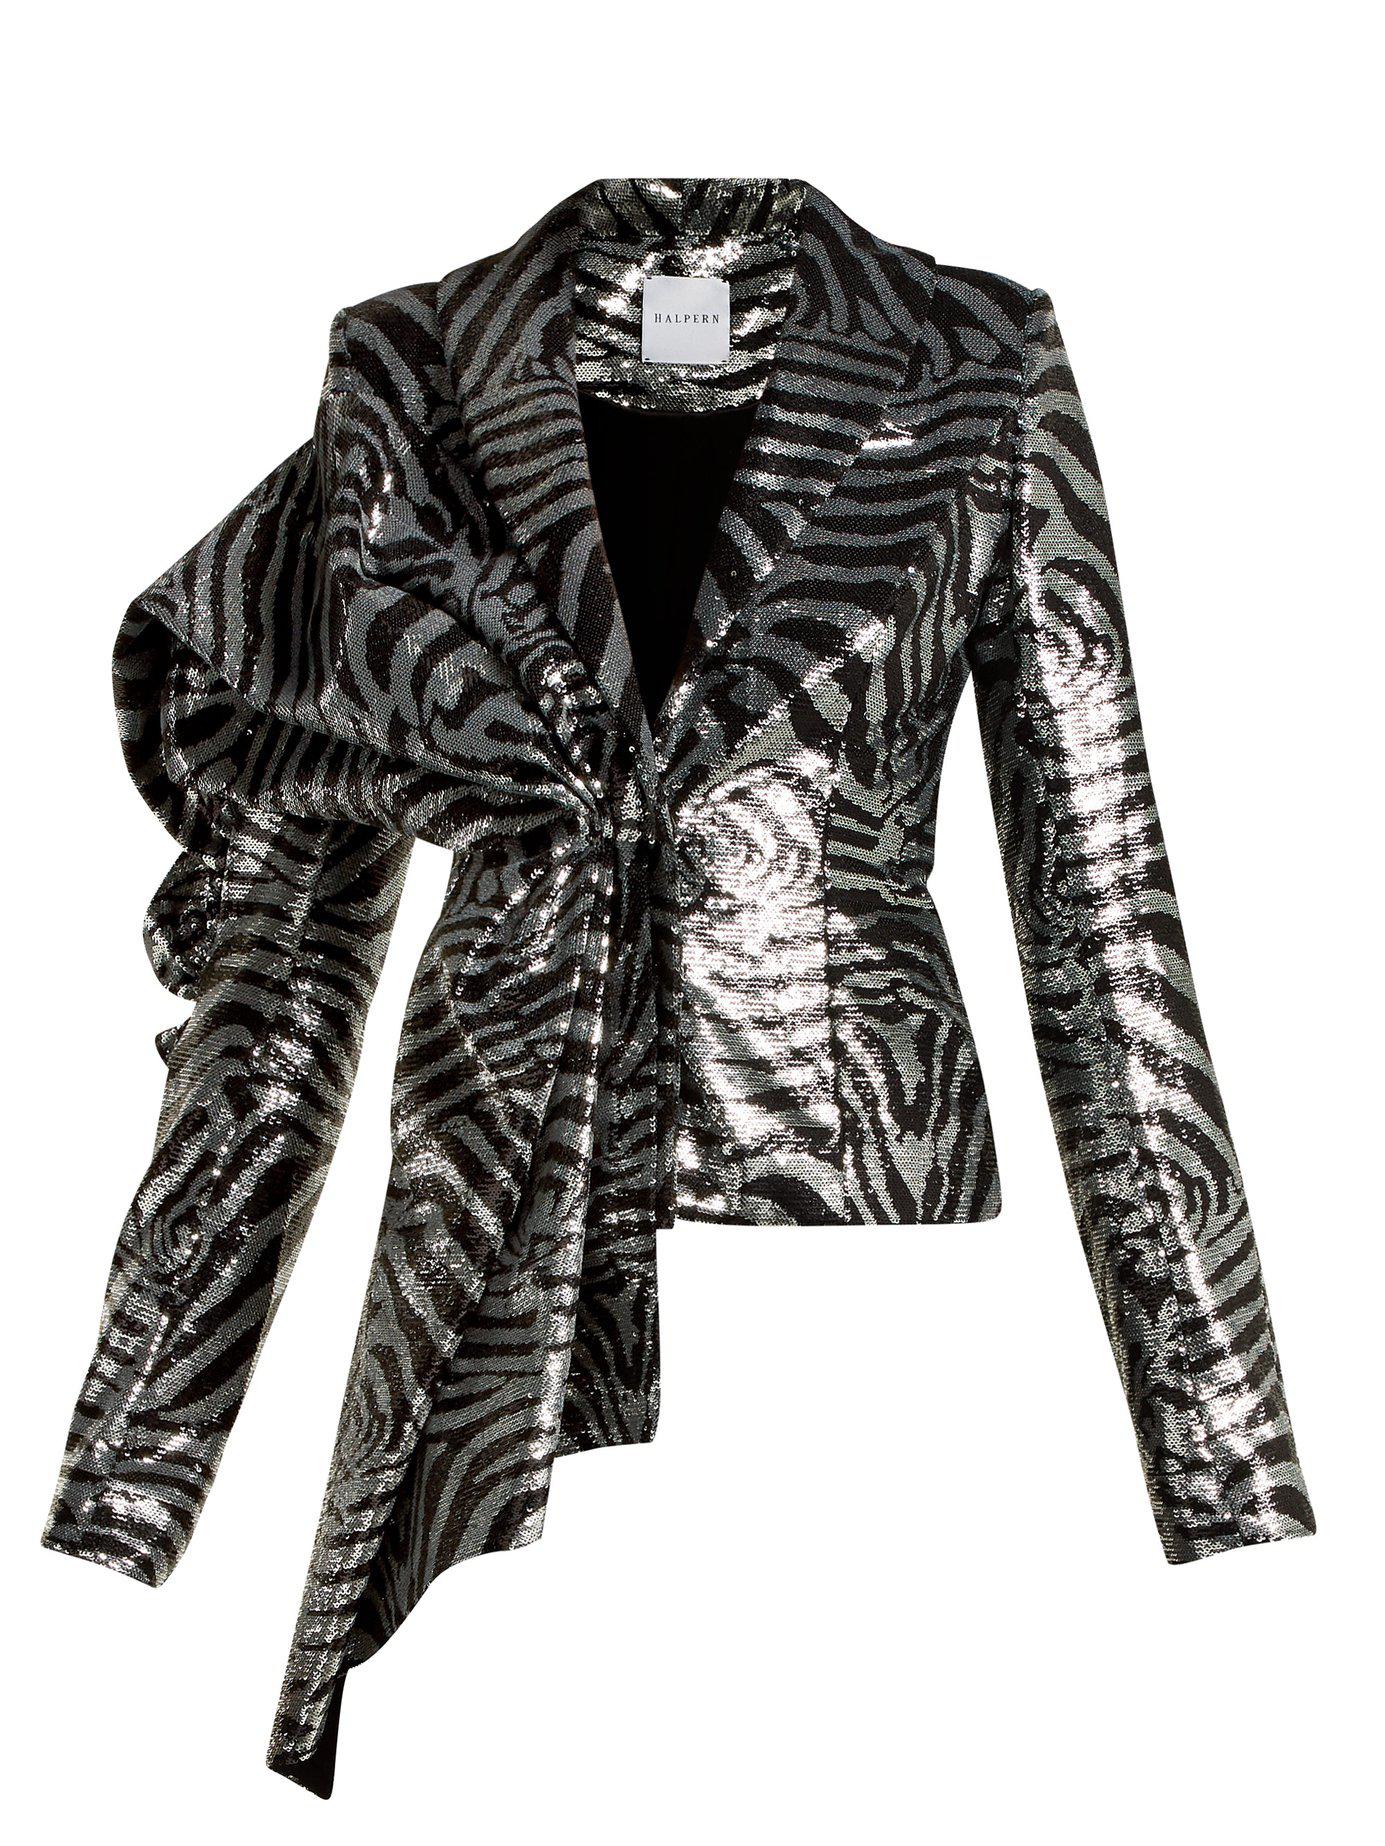 Halpern Zebra Stripe Sequined Jacket - Lyst